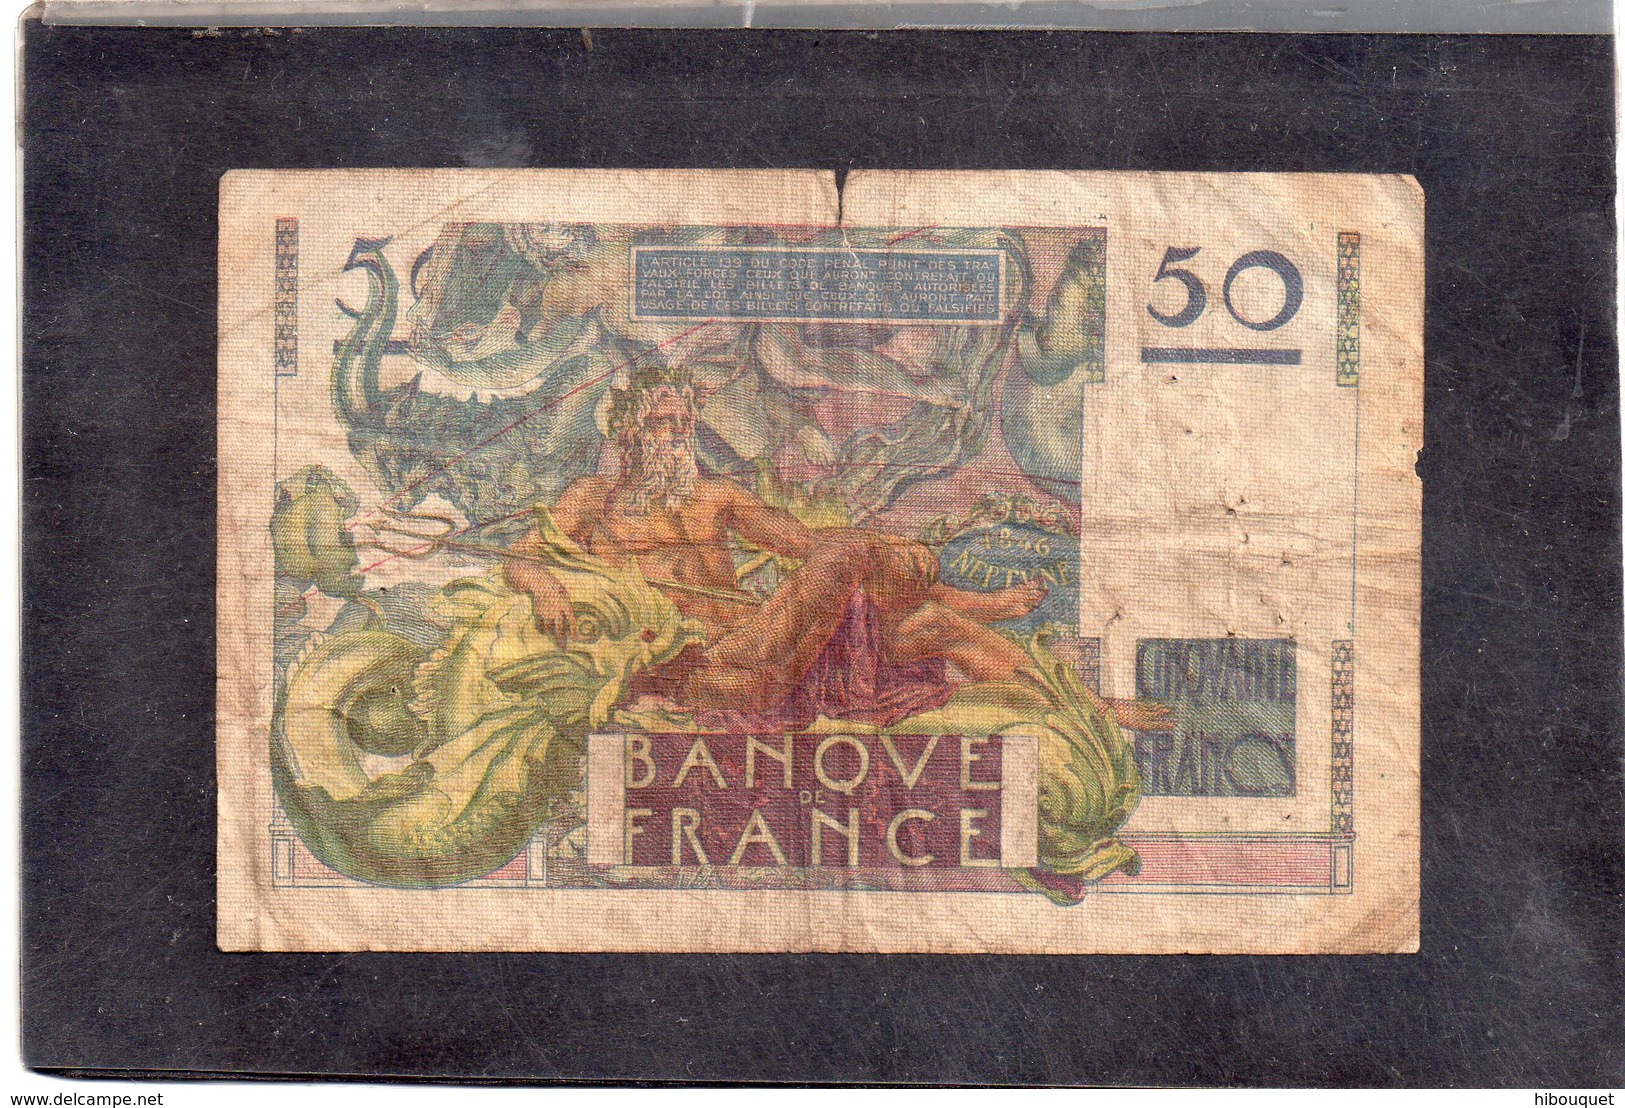 Billet De 50 Francs Berger M 2-5-1946 M - 5 F 1943-1947 ''Berger''